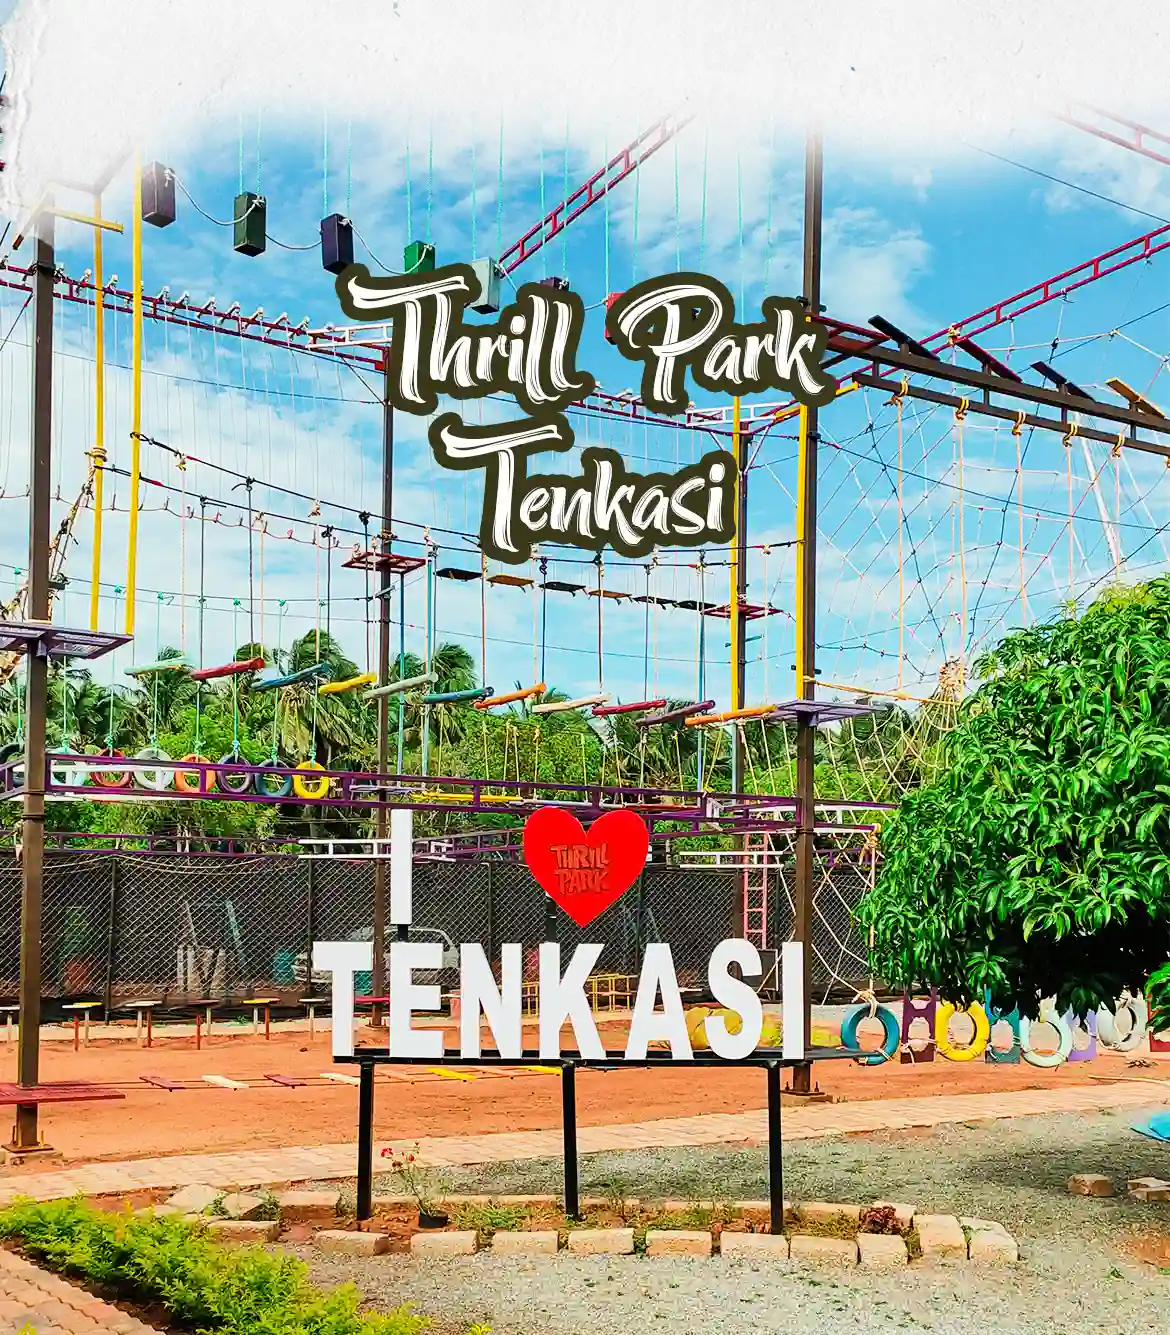 Thrill Park at Tenkasi